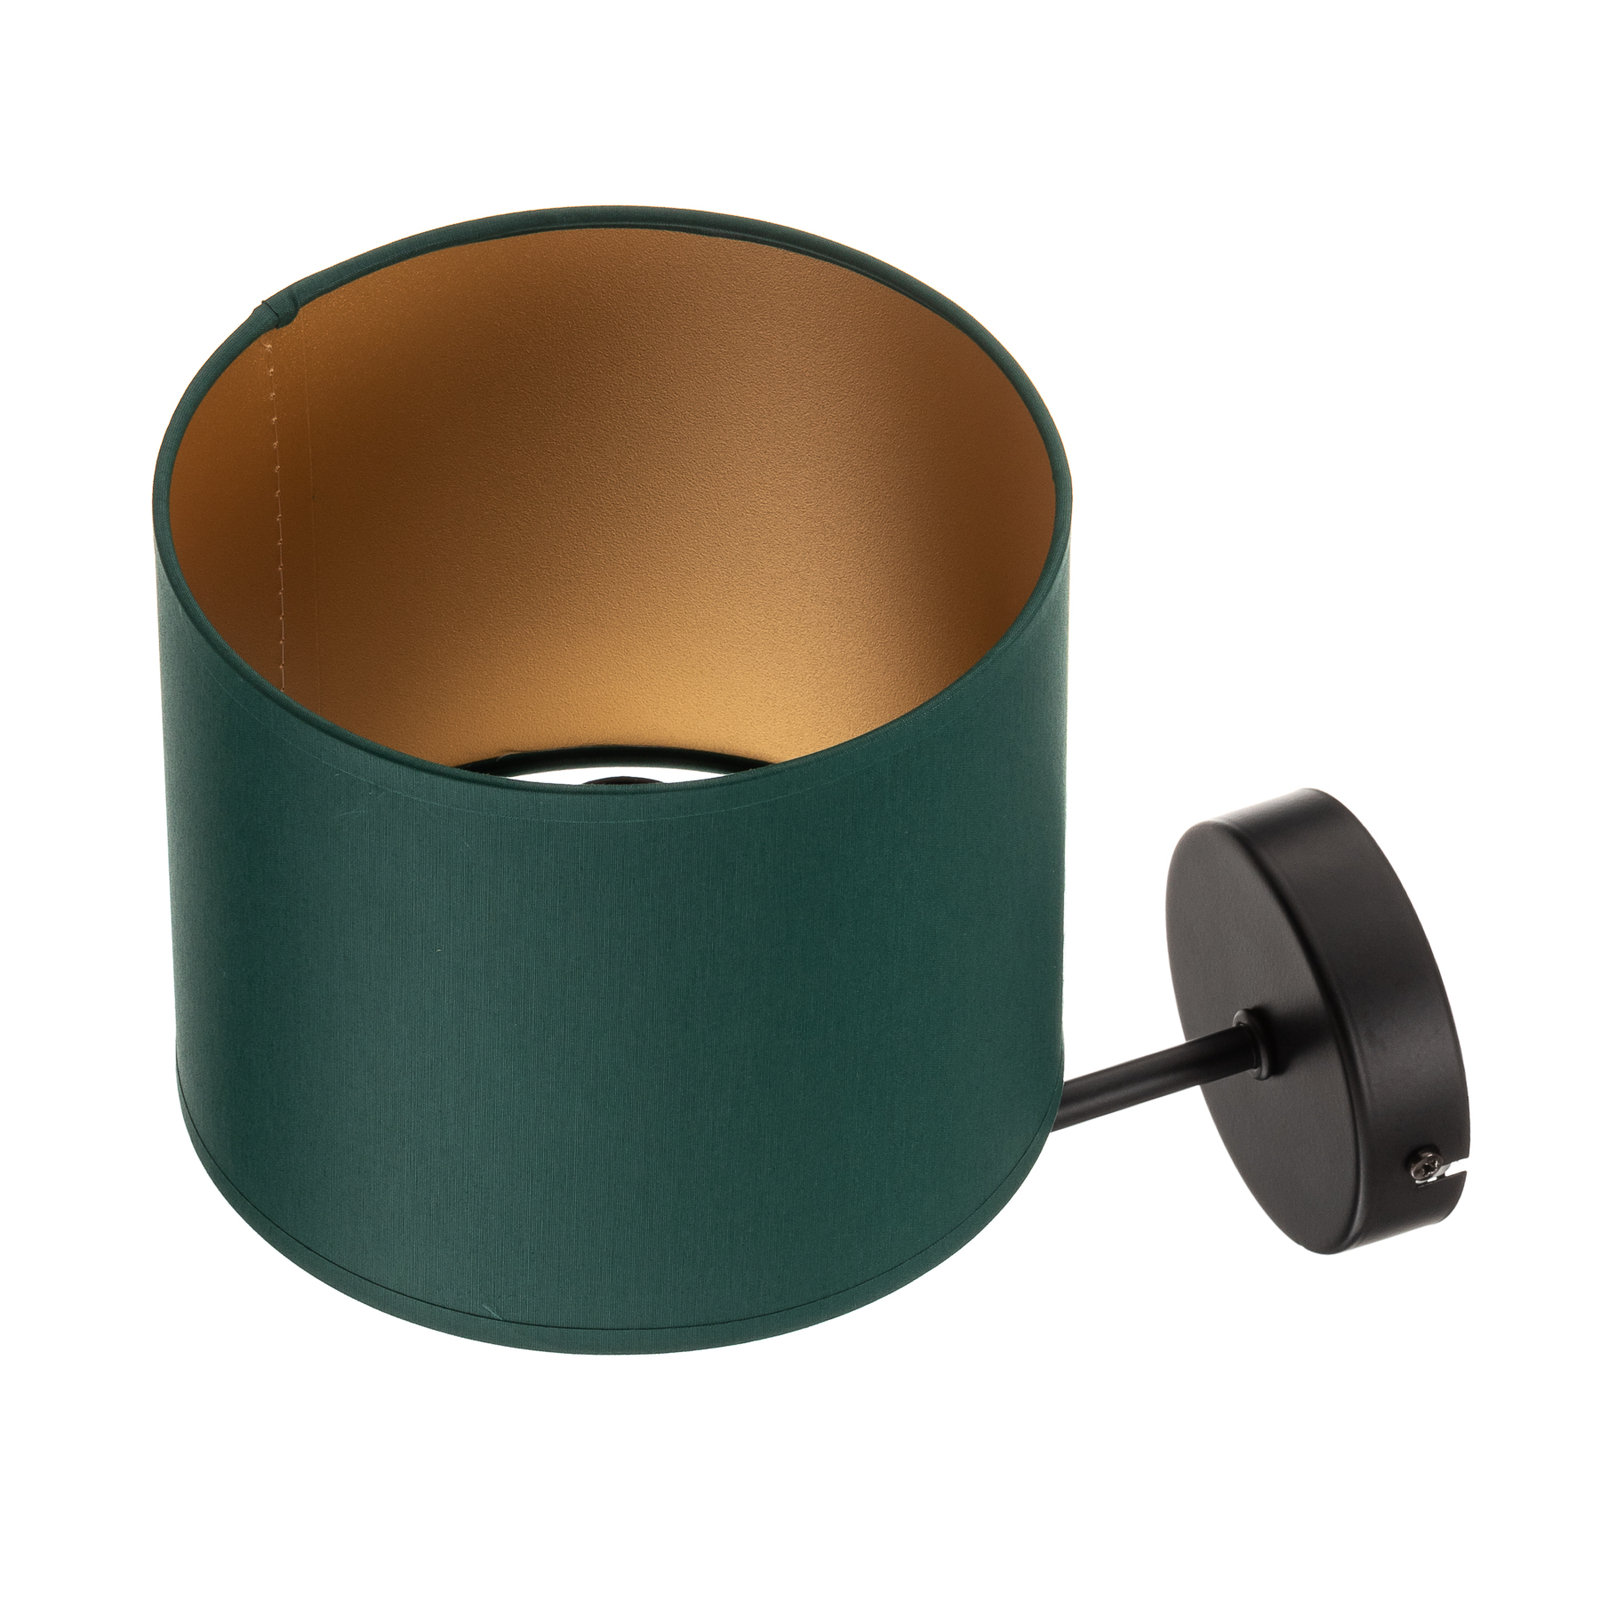 Soho wall light, cylindrical, green/gold